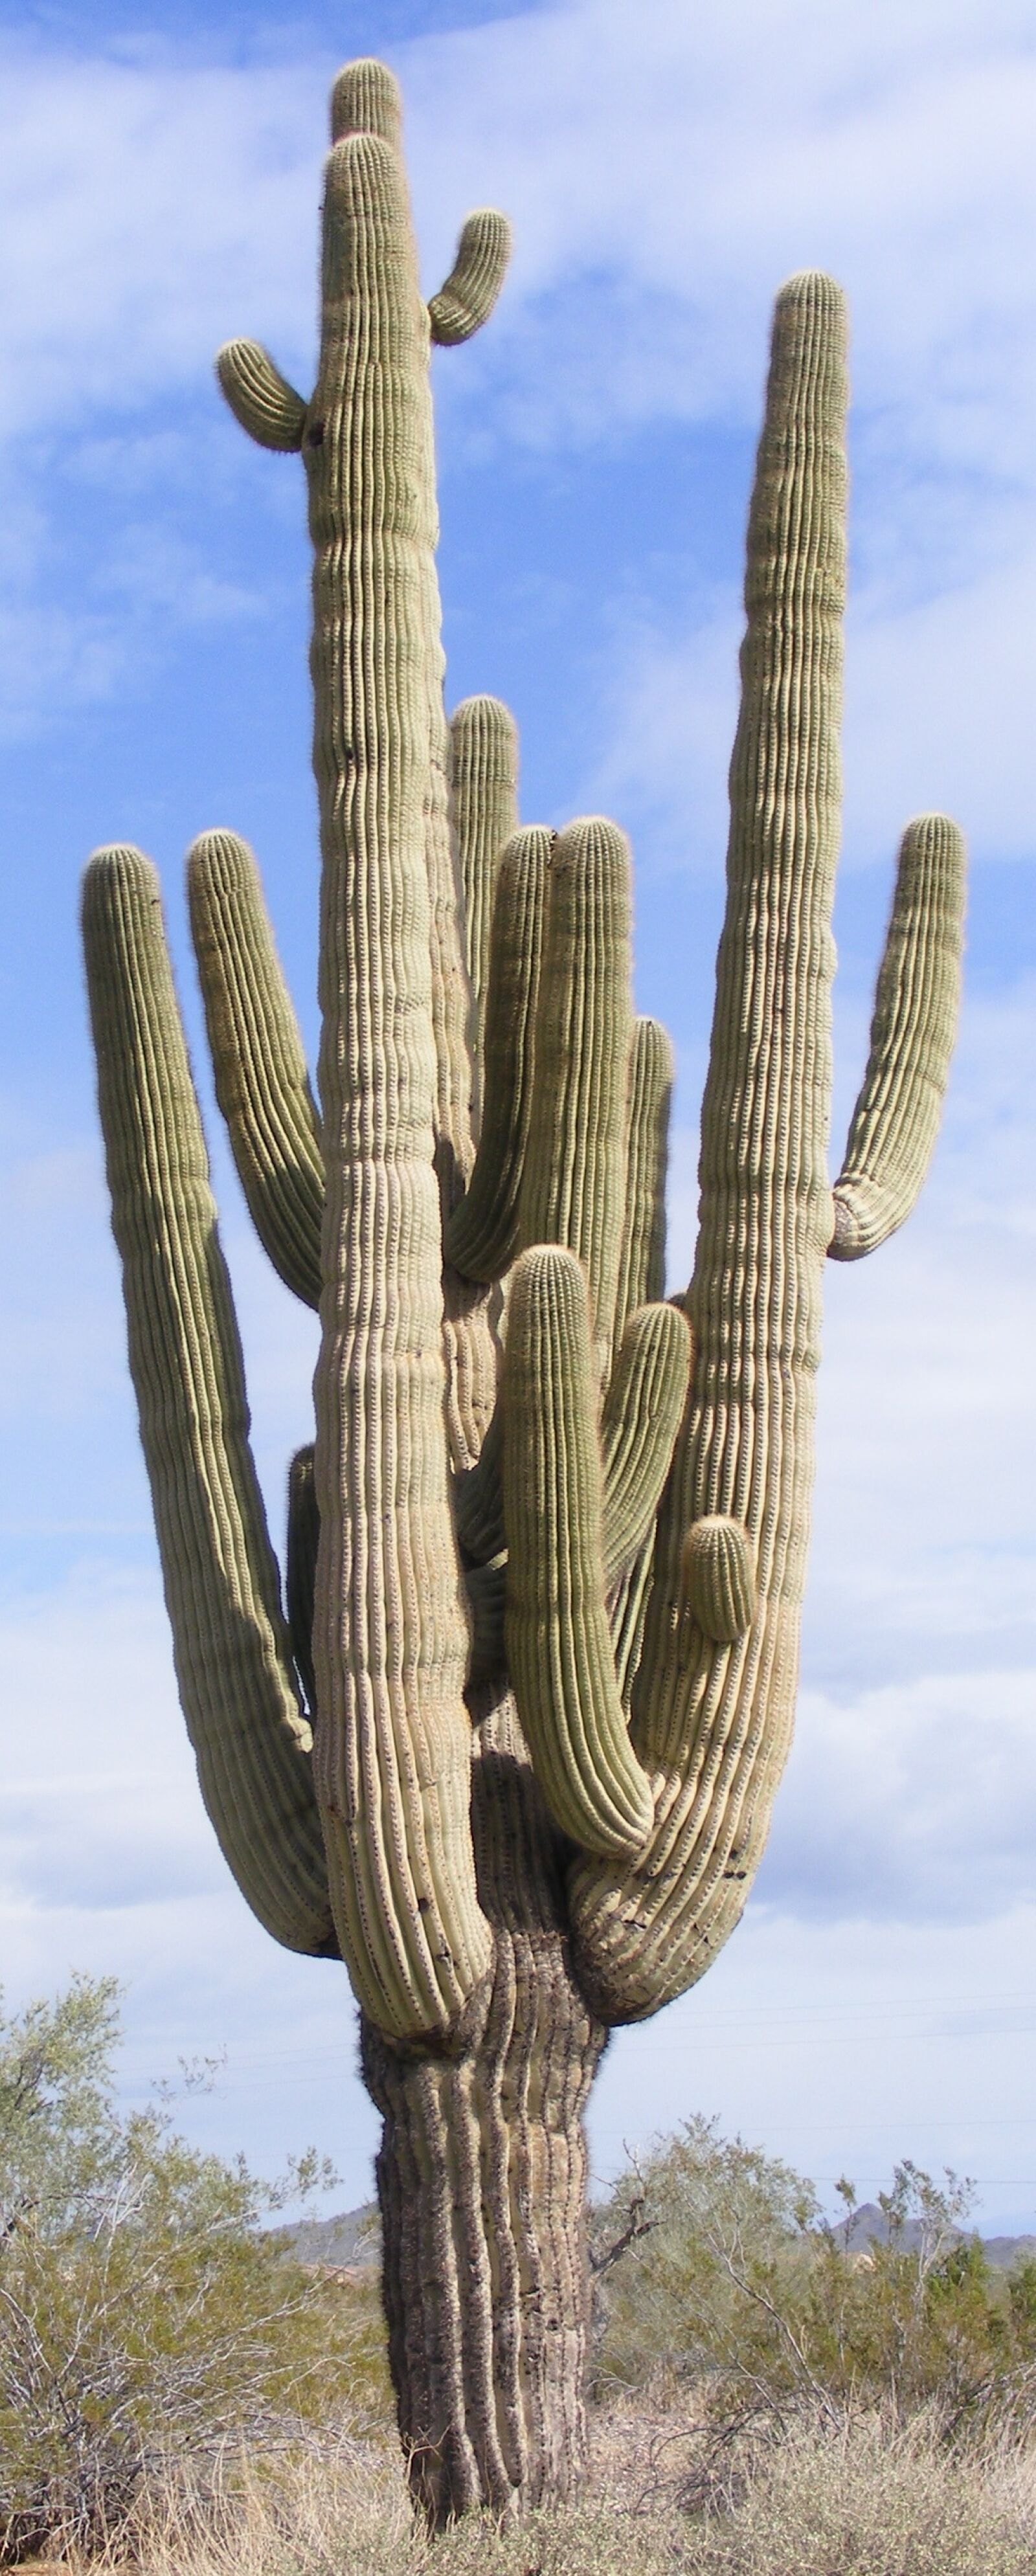 Fujifilm FinePix S5700 S700 sample photo. Cactus, multiple arms, saguaro photography